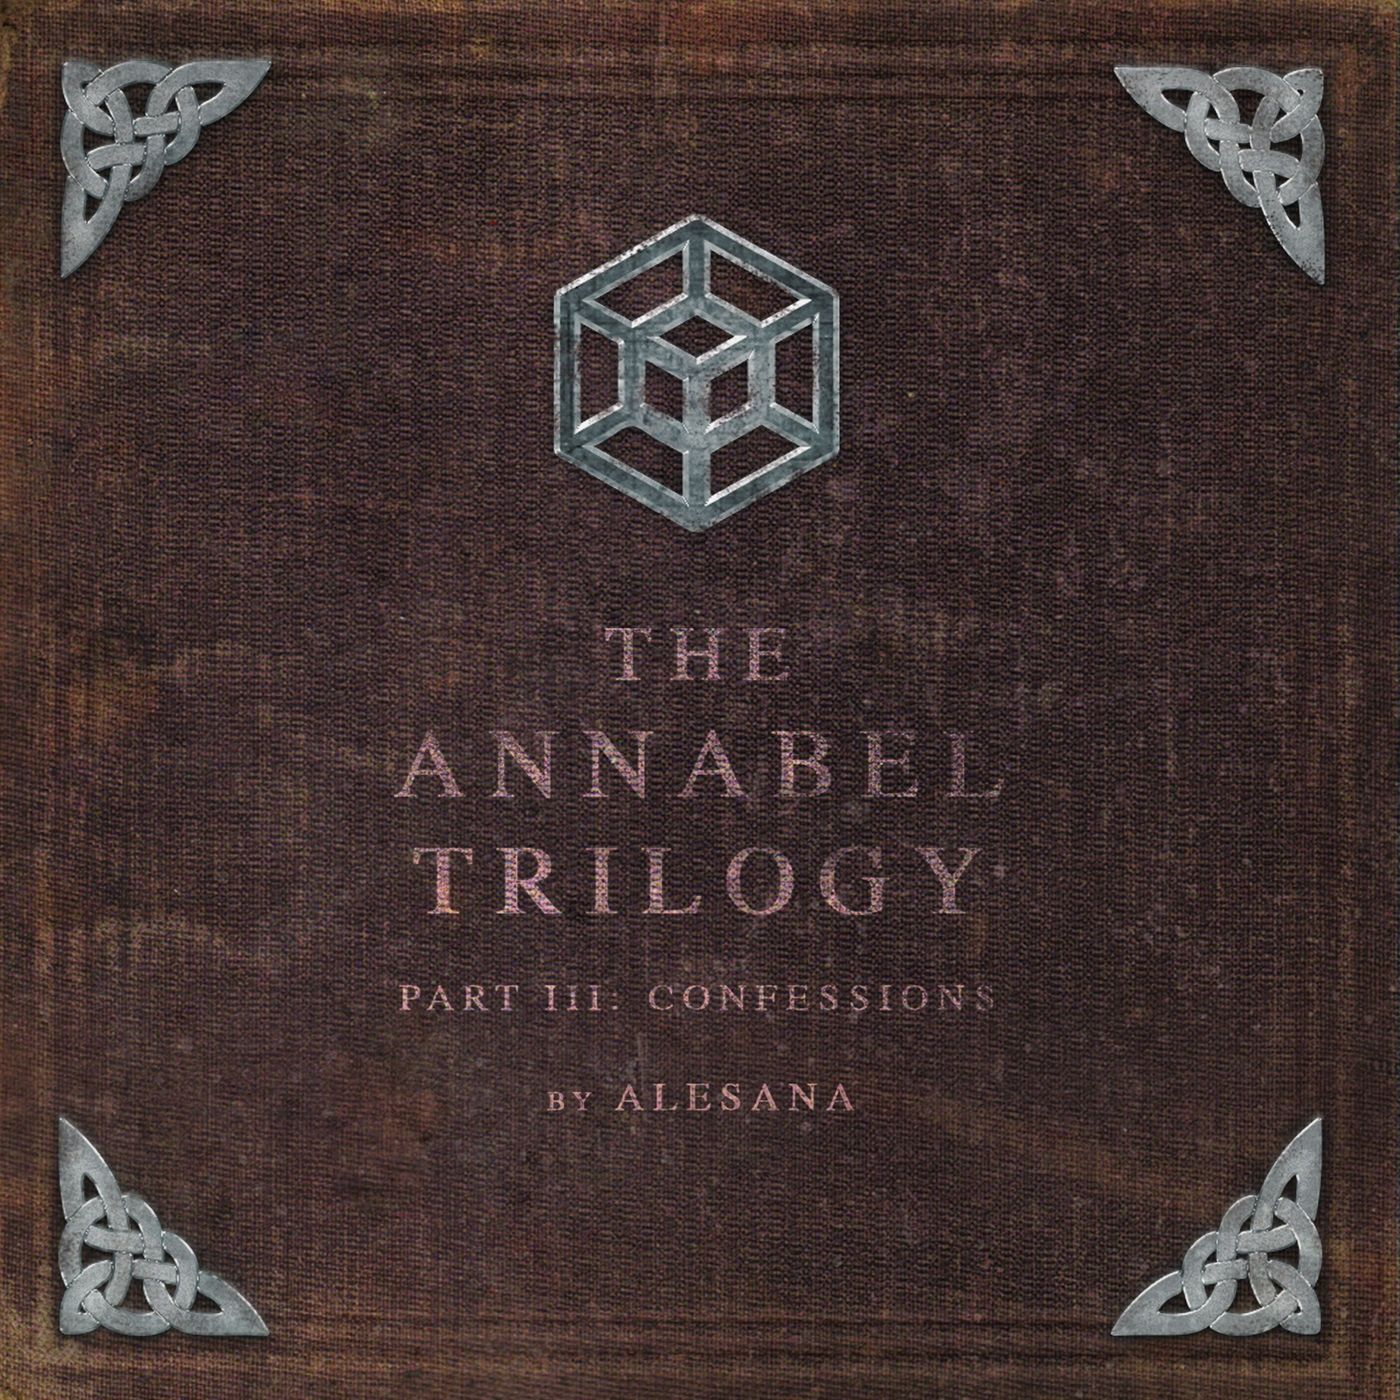 Imagem do álbum The Annabel Trilogy Part III - Confessions do(a) artista Alesana